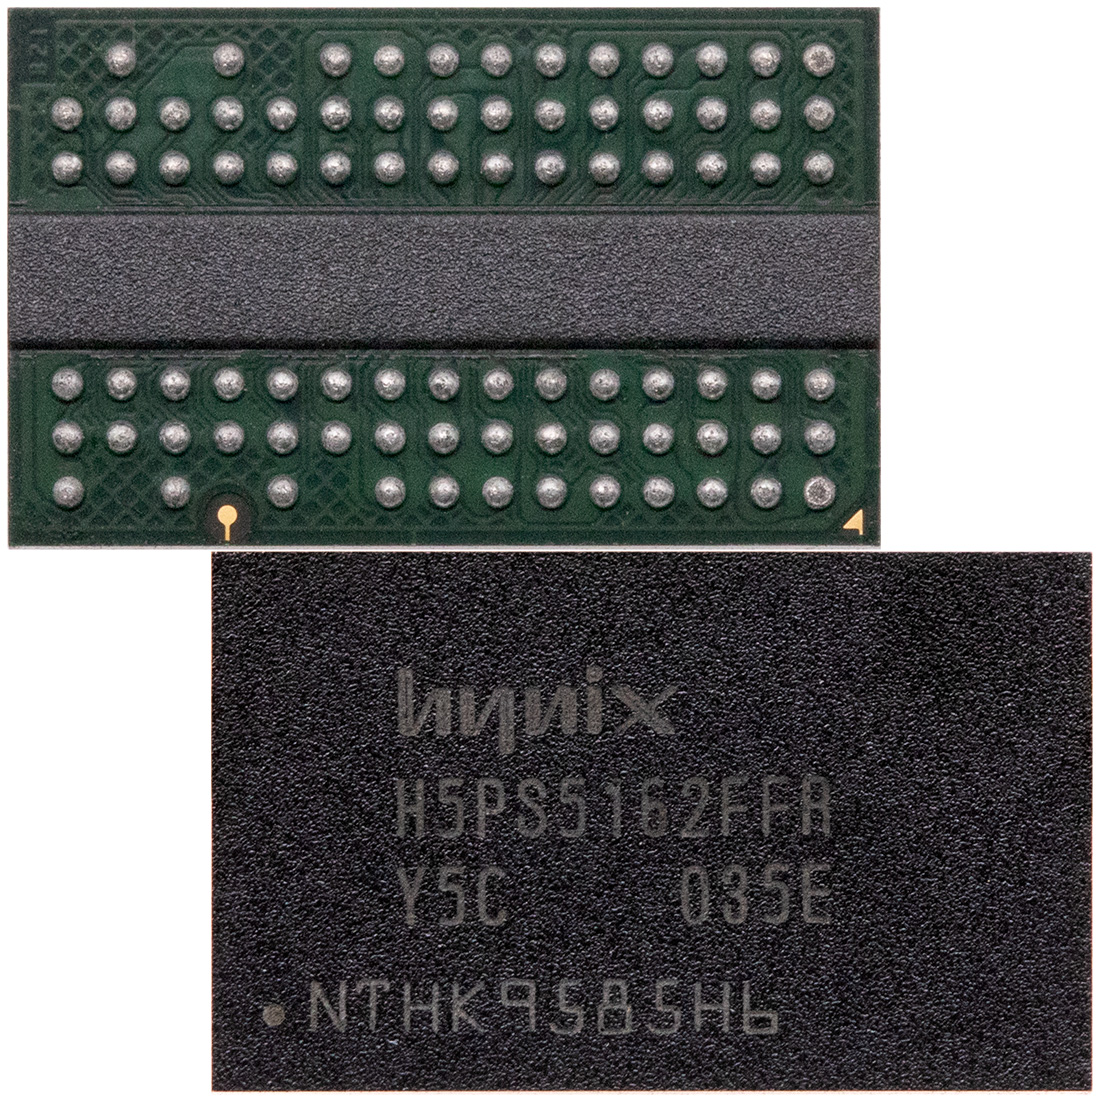 海力士内存512M DDR2,Hynix 32MX16 DDR2,H5PS5162FFR-Y5C，海力士BGA内存，Hyninx内存